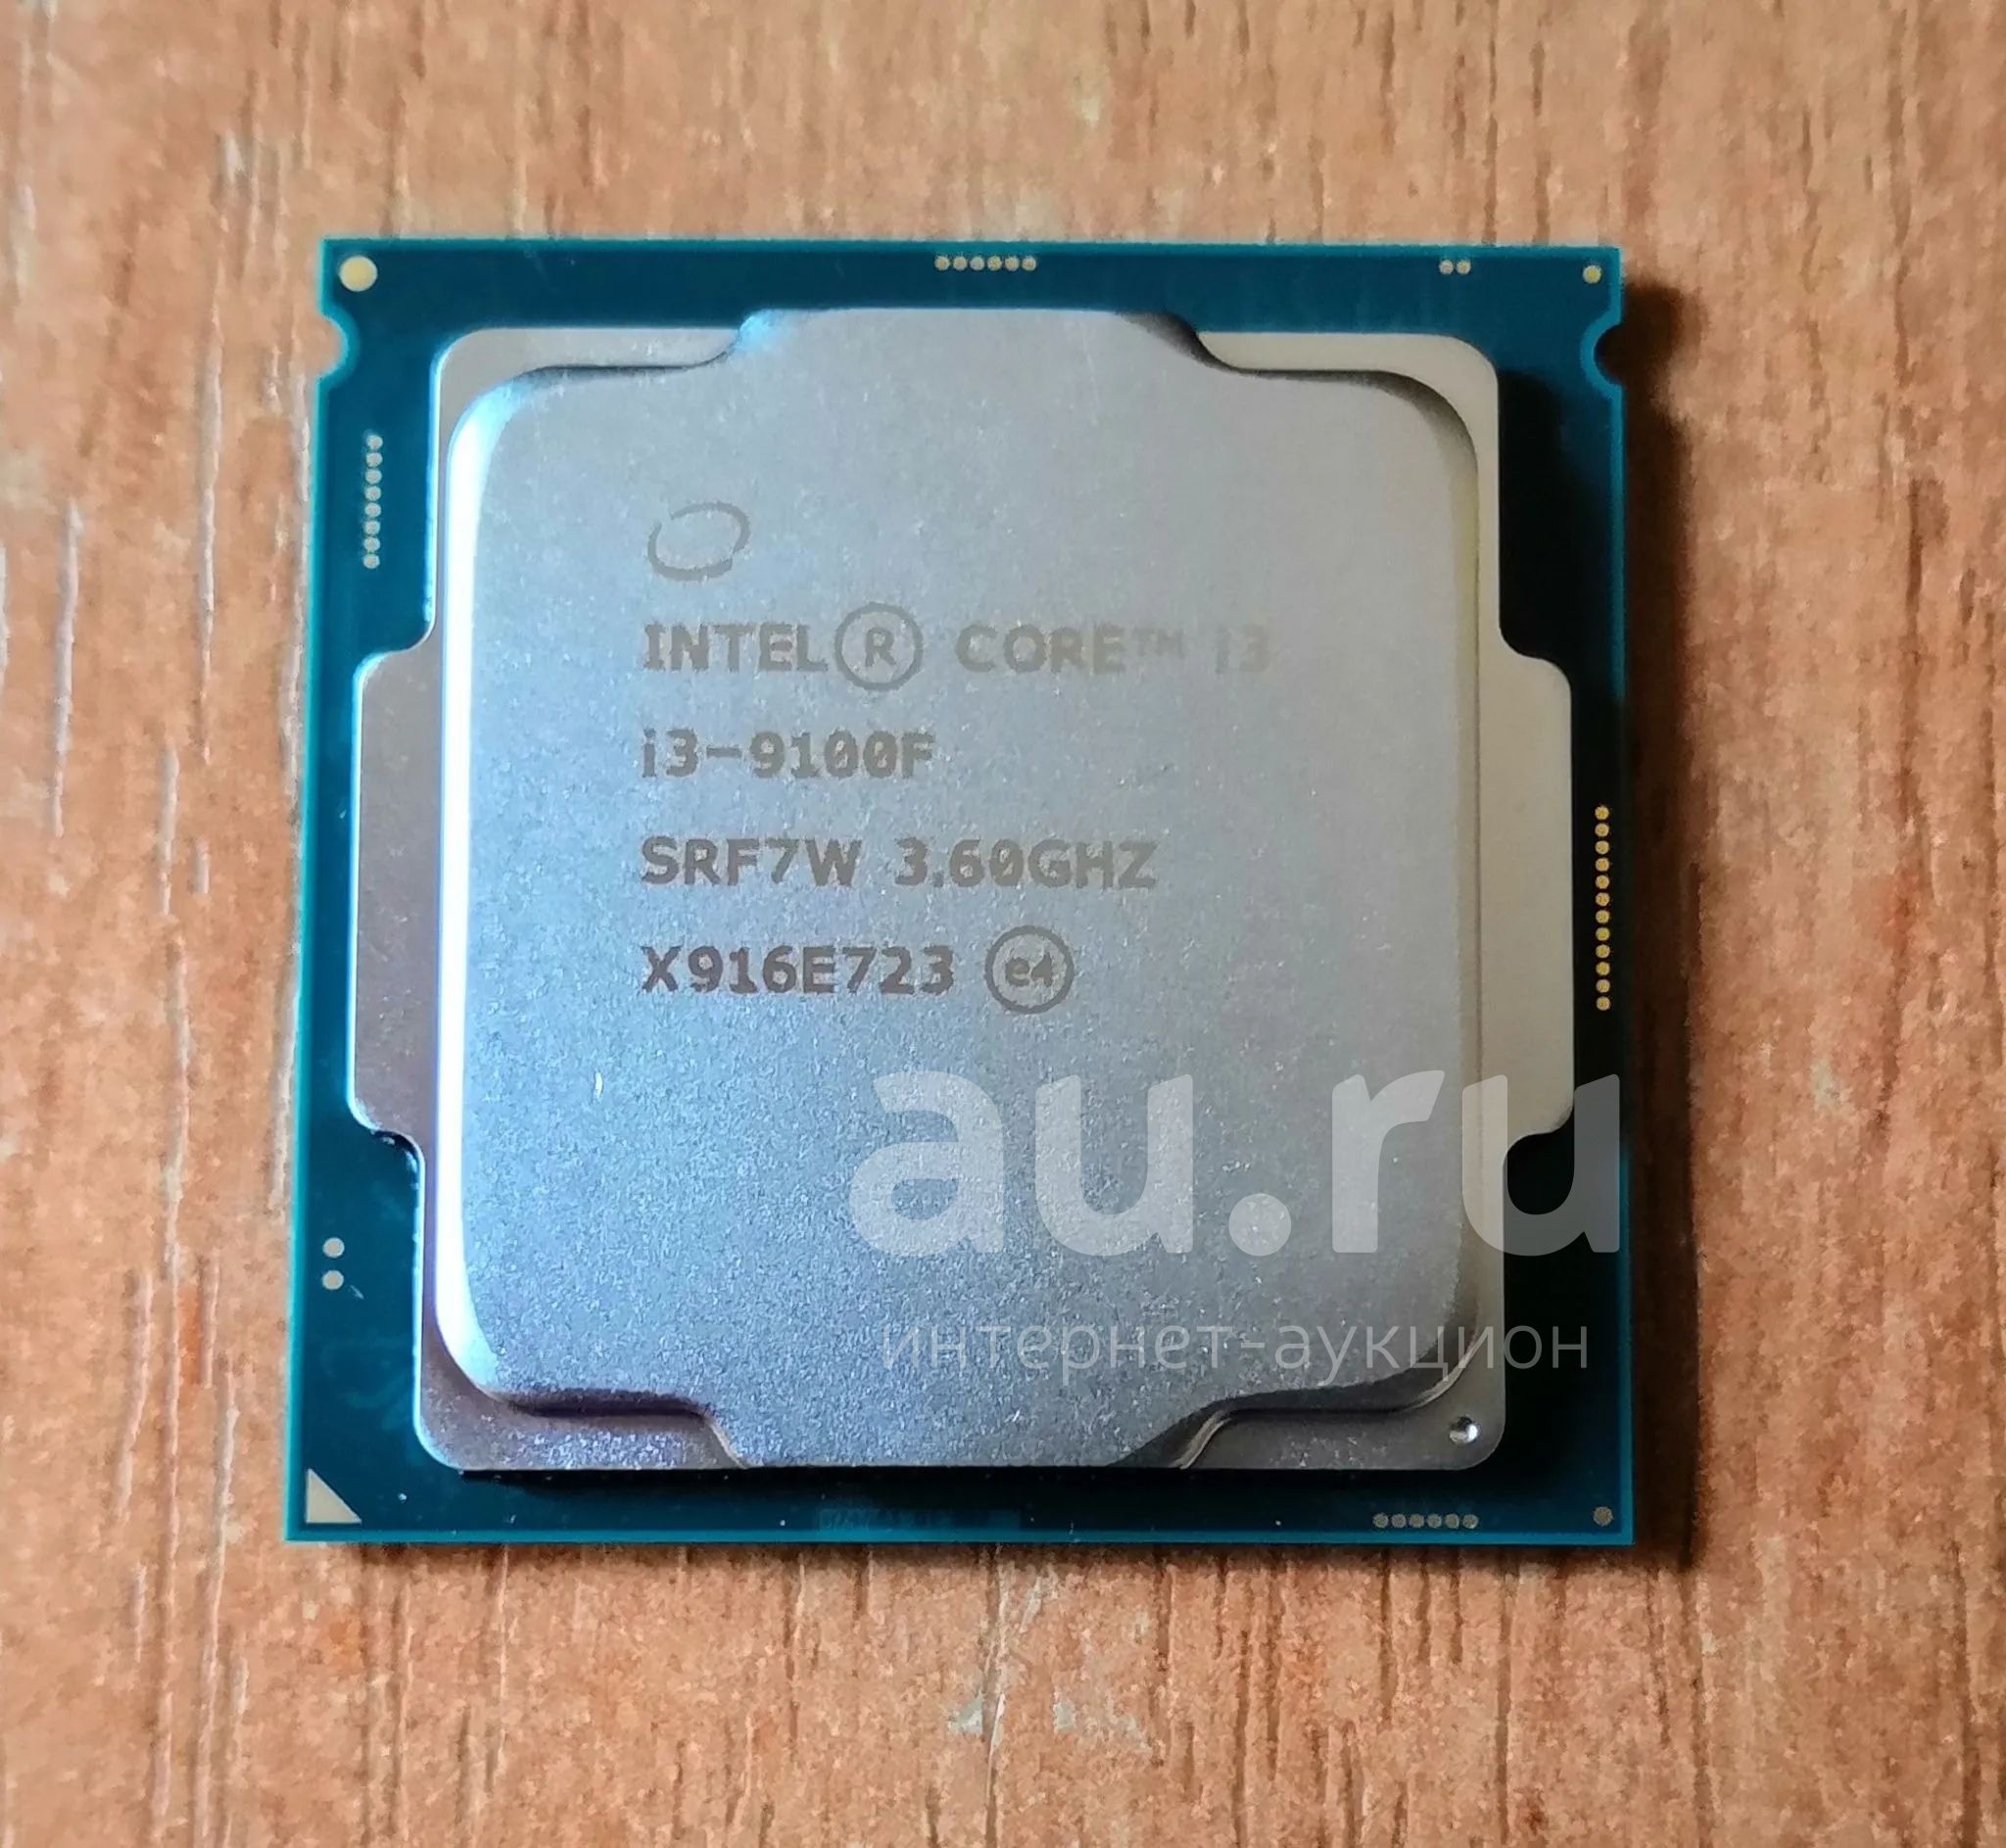 Интел core i3. Процессор Intel Core i3-9100f. Процессор Intel Core i3-9100f OEM. Процессор Intel Core i3-10105 OEM. Процессор Интел кор i3 9100f.